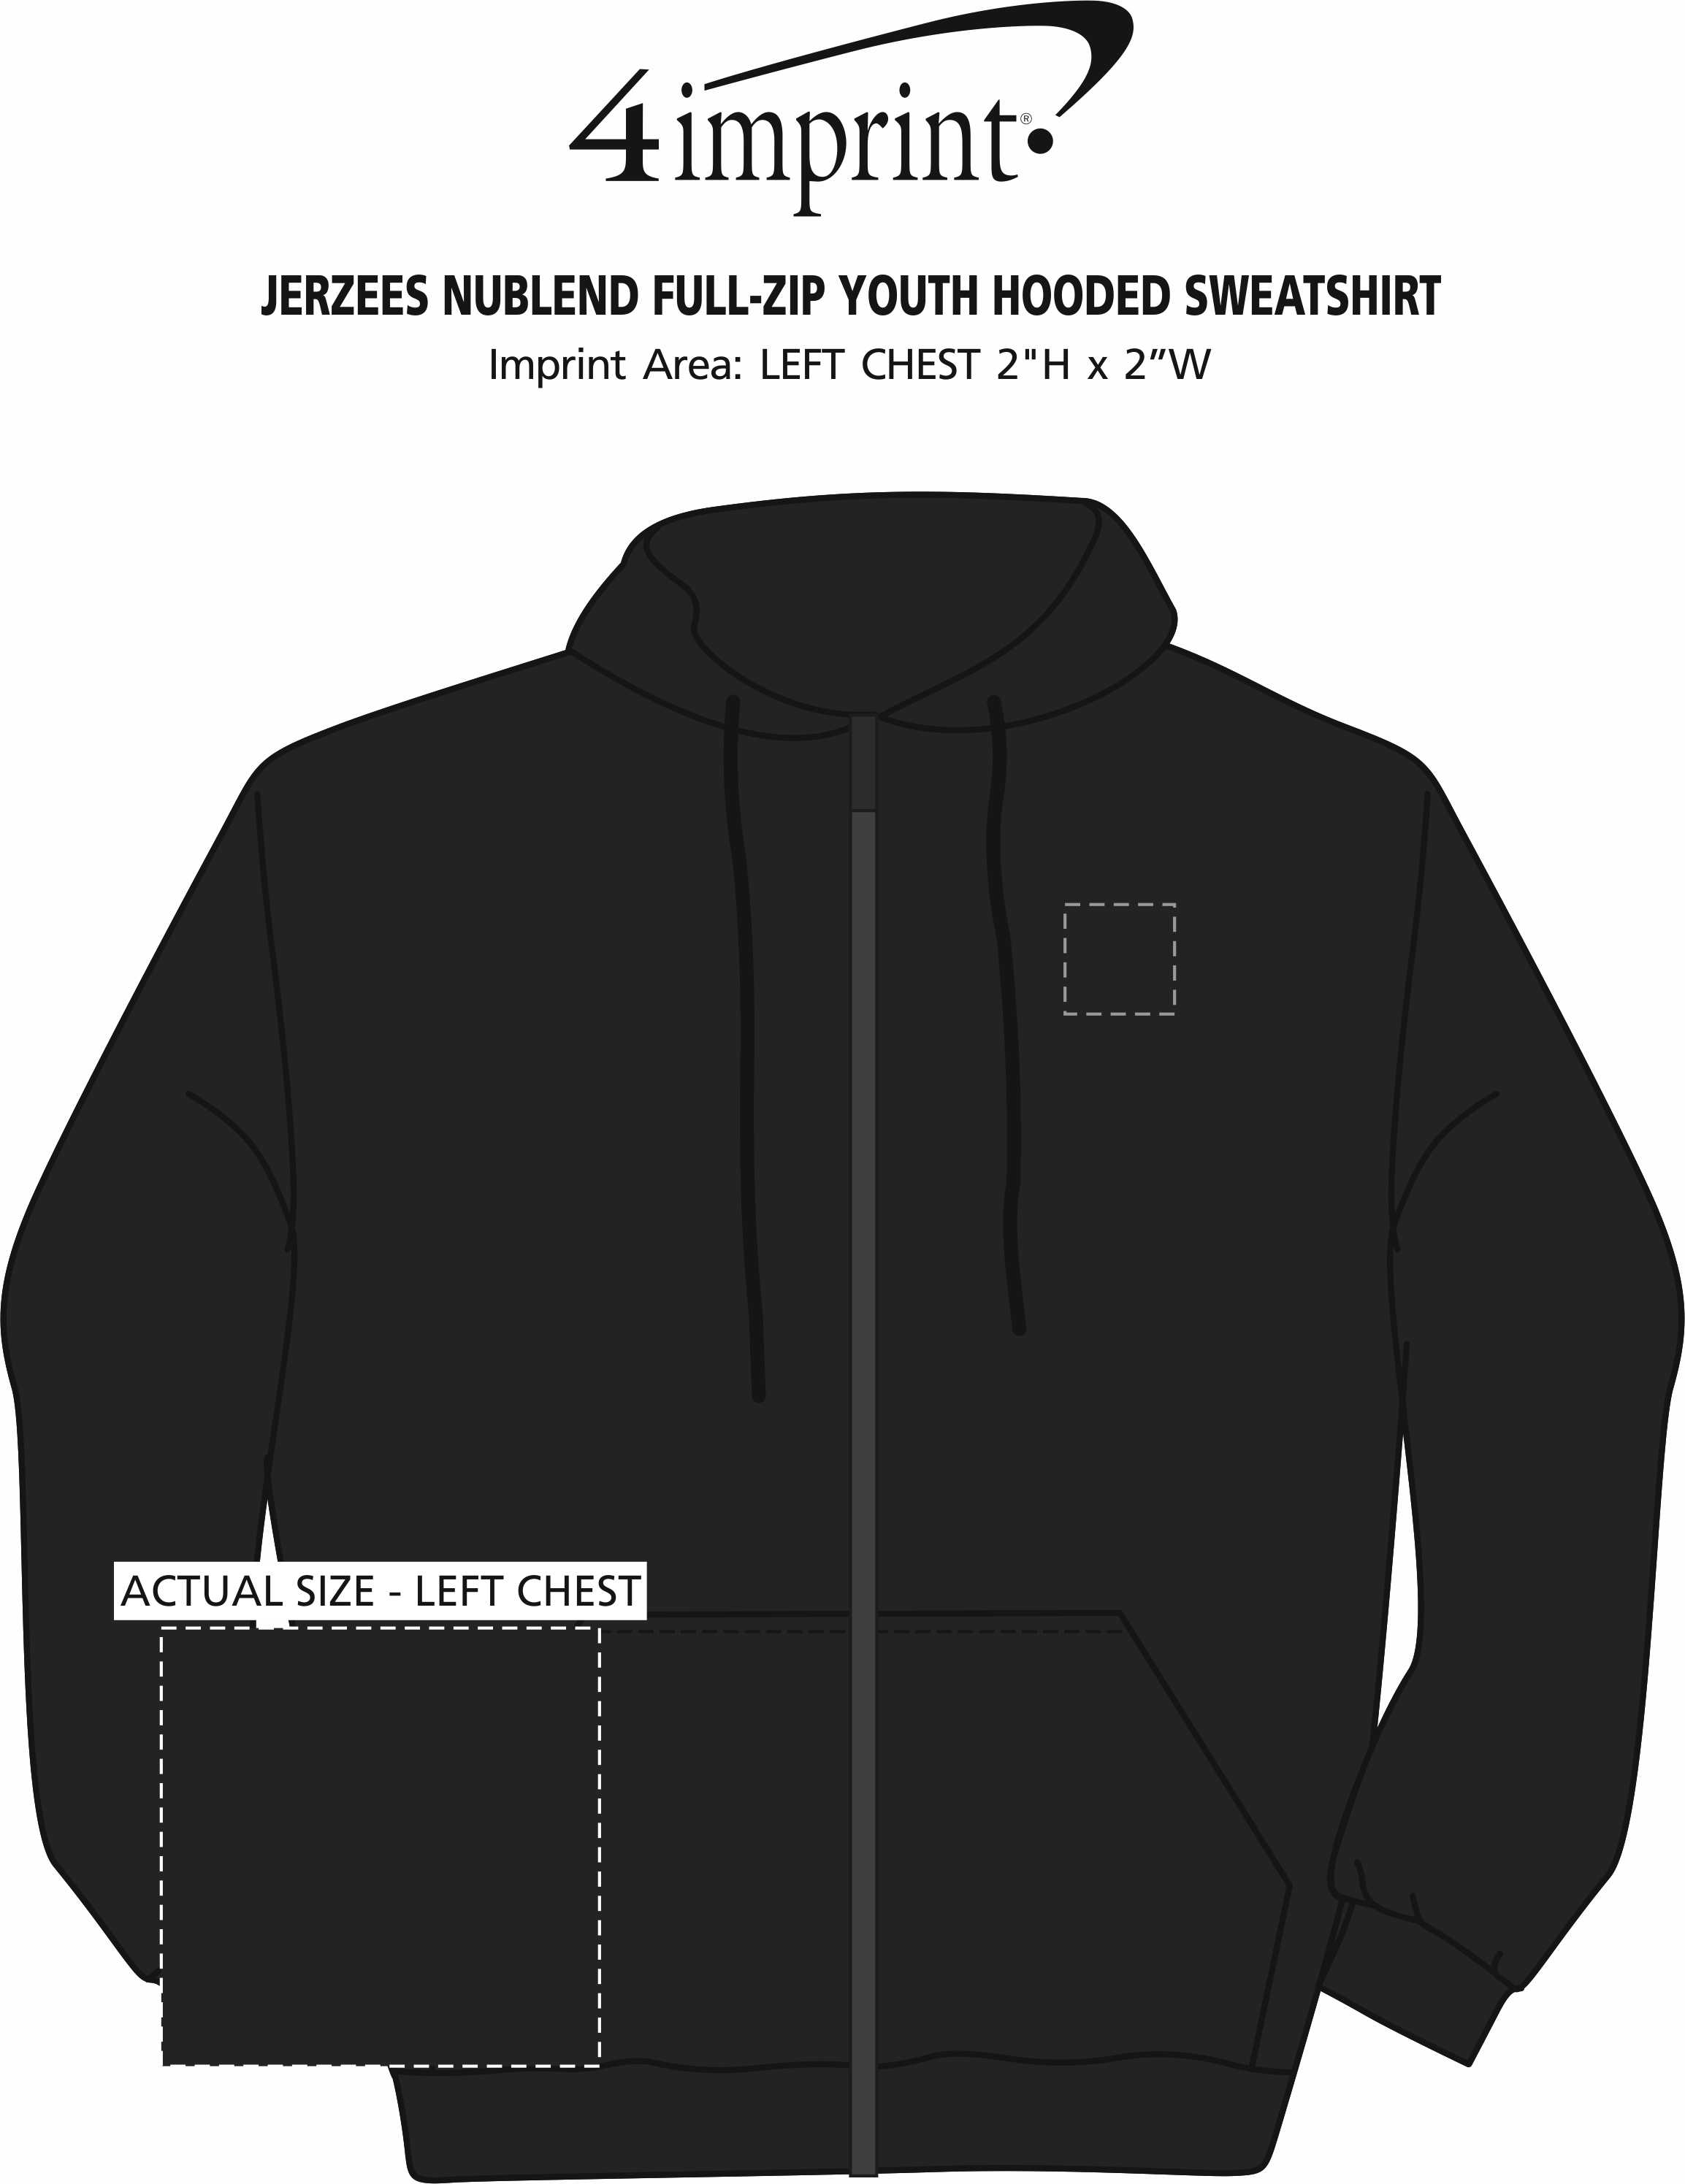 Imprint Area of Jerzees NuBlend Full-Zip Hooded Sweatshirt - Youth - Screen